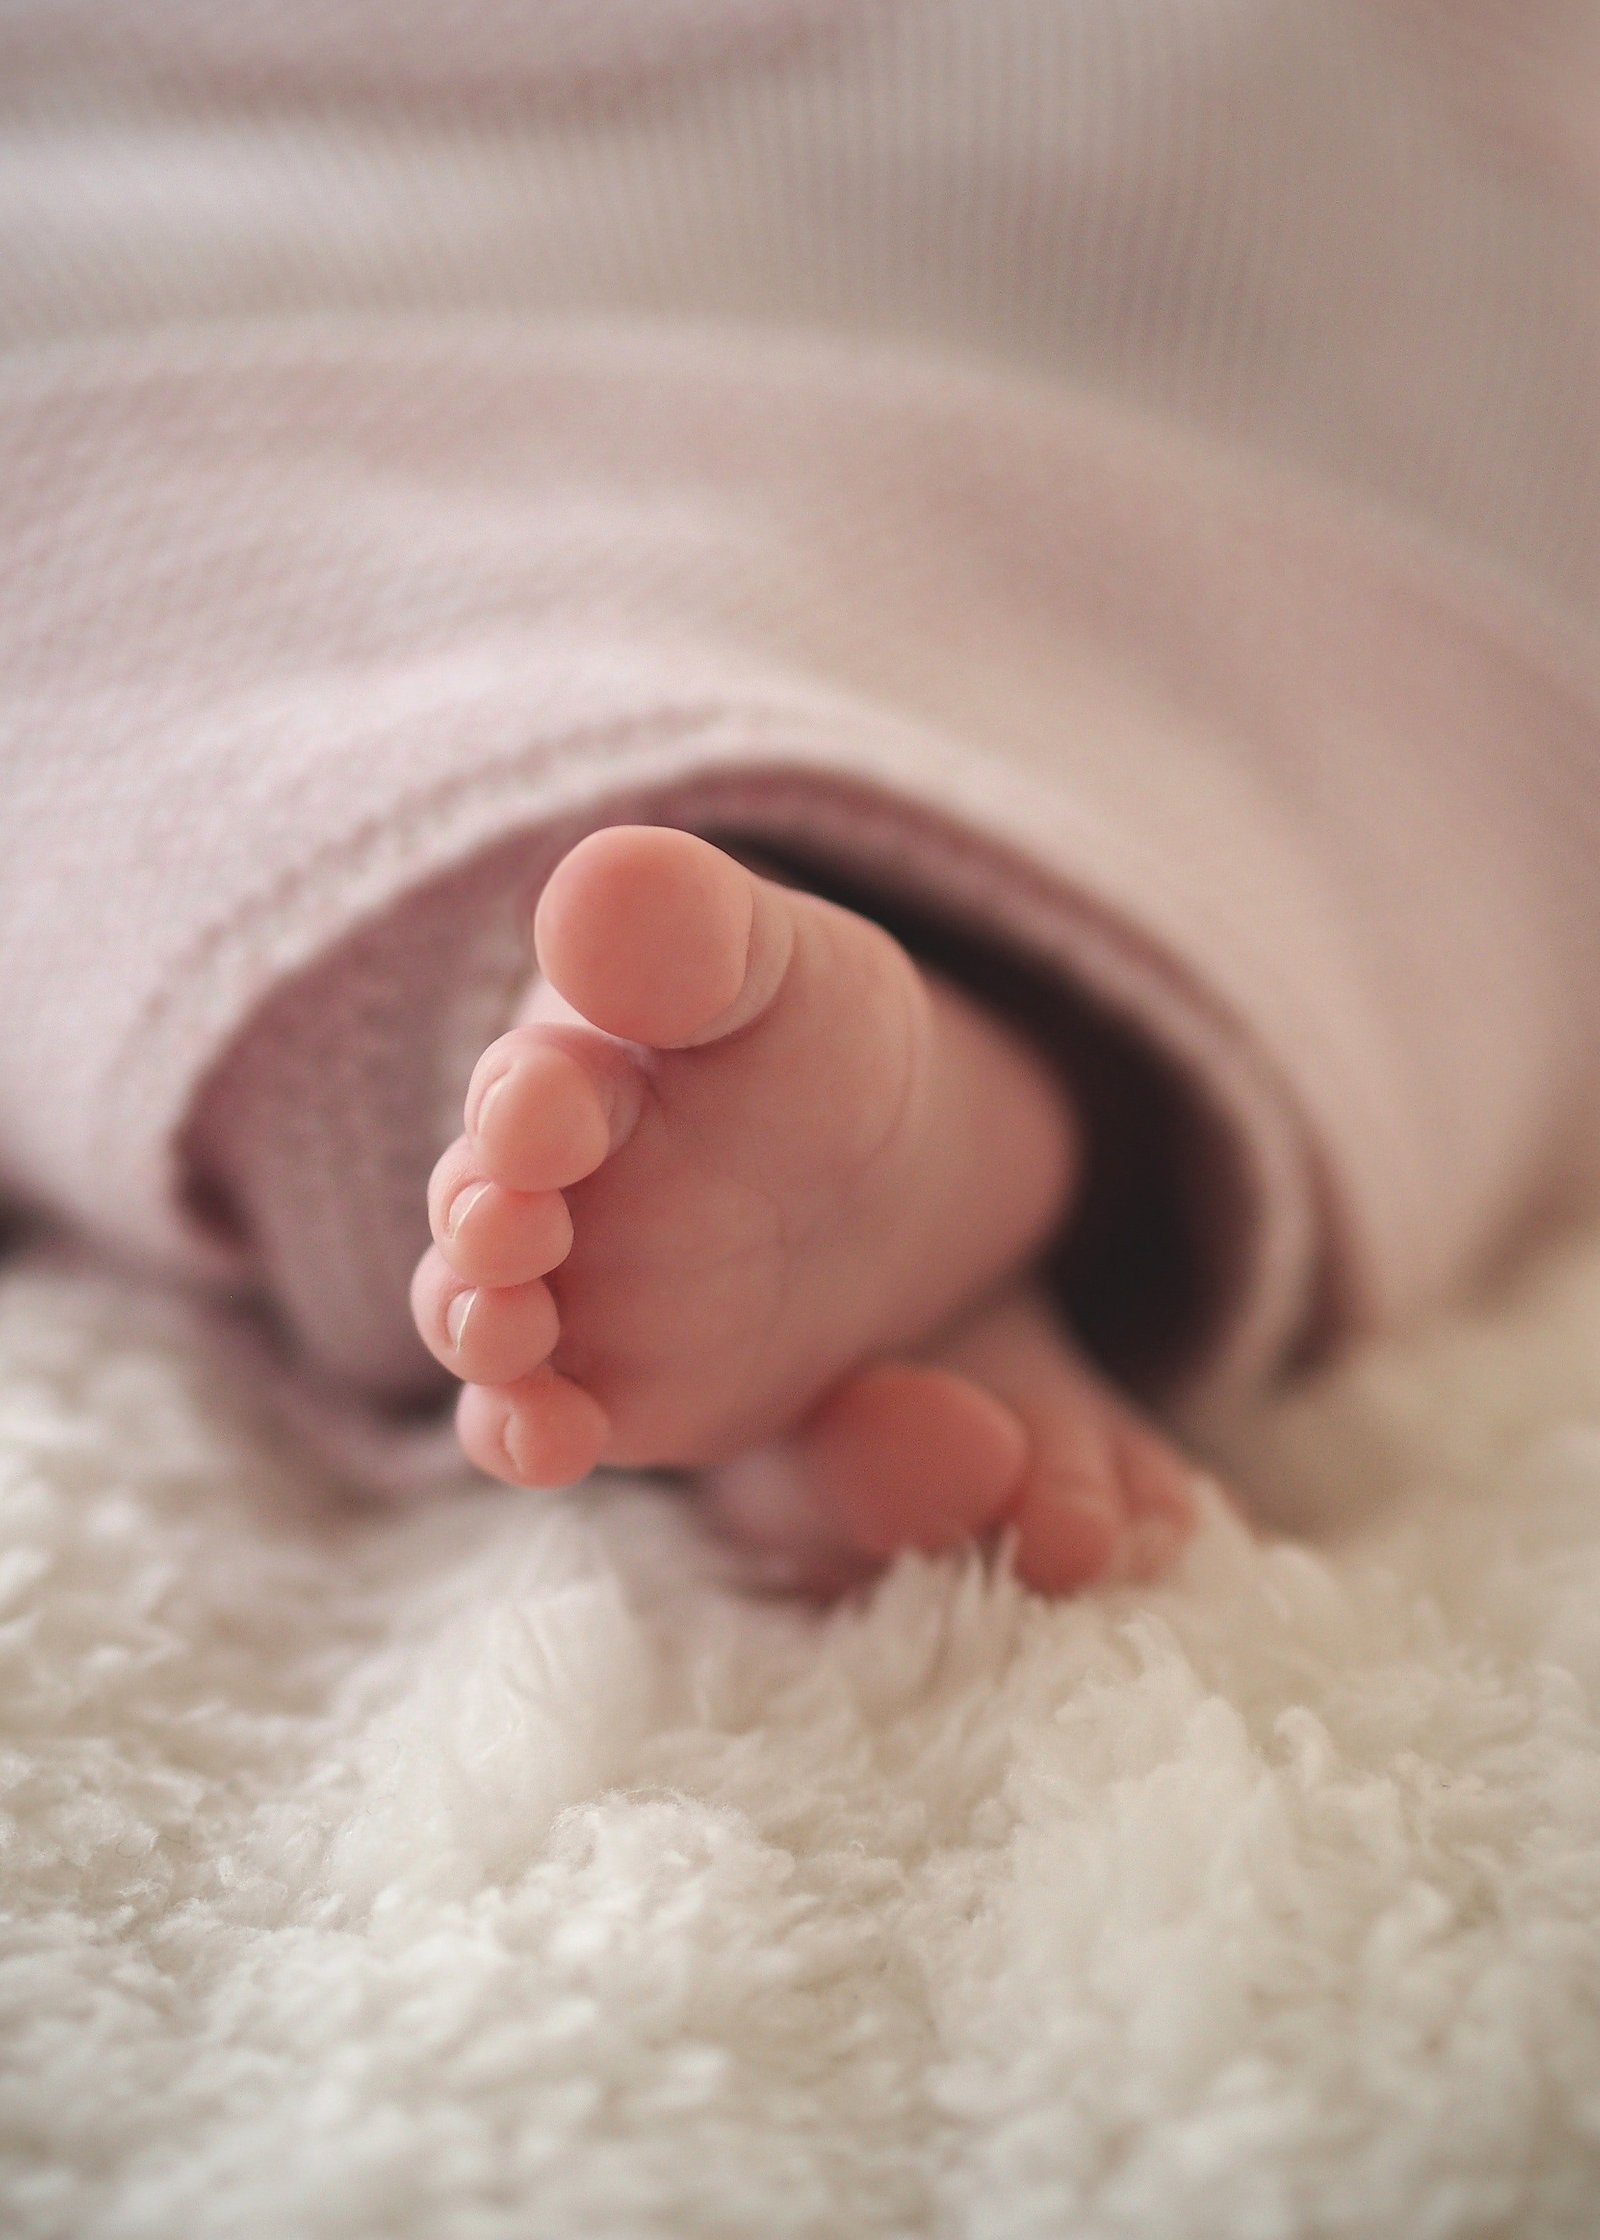 baby-baby-feet-blanket-326545